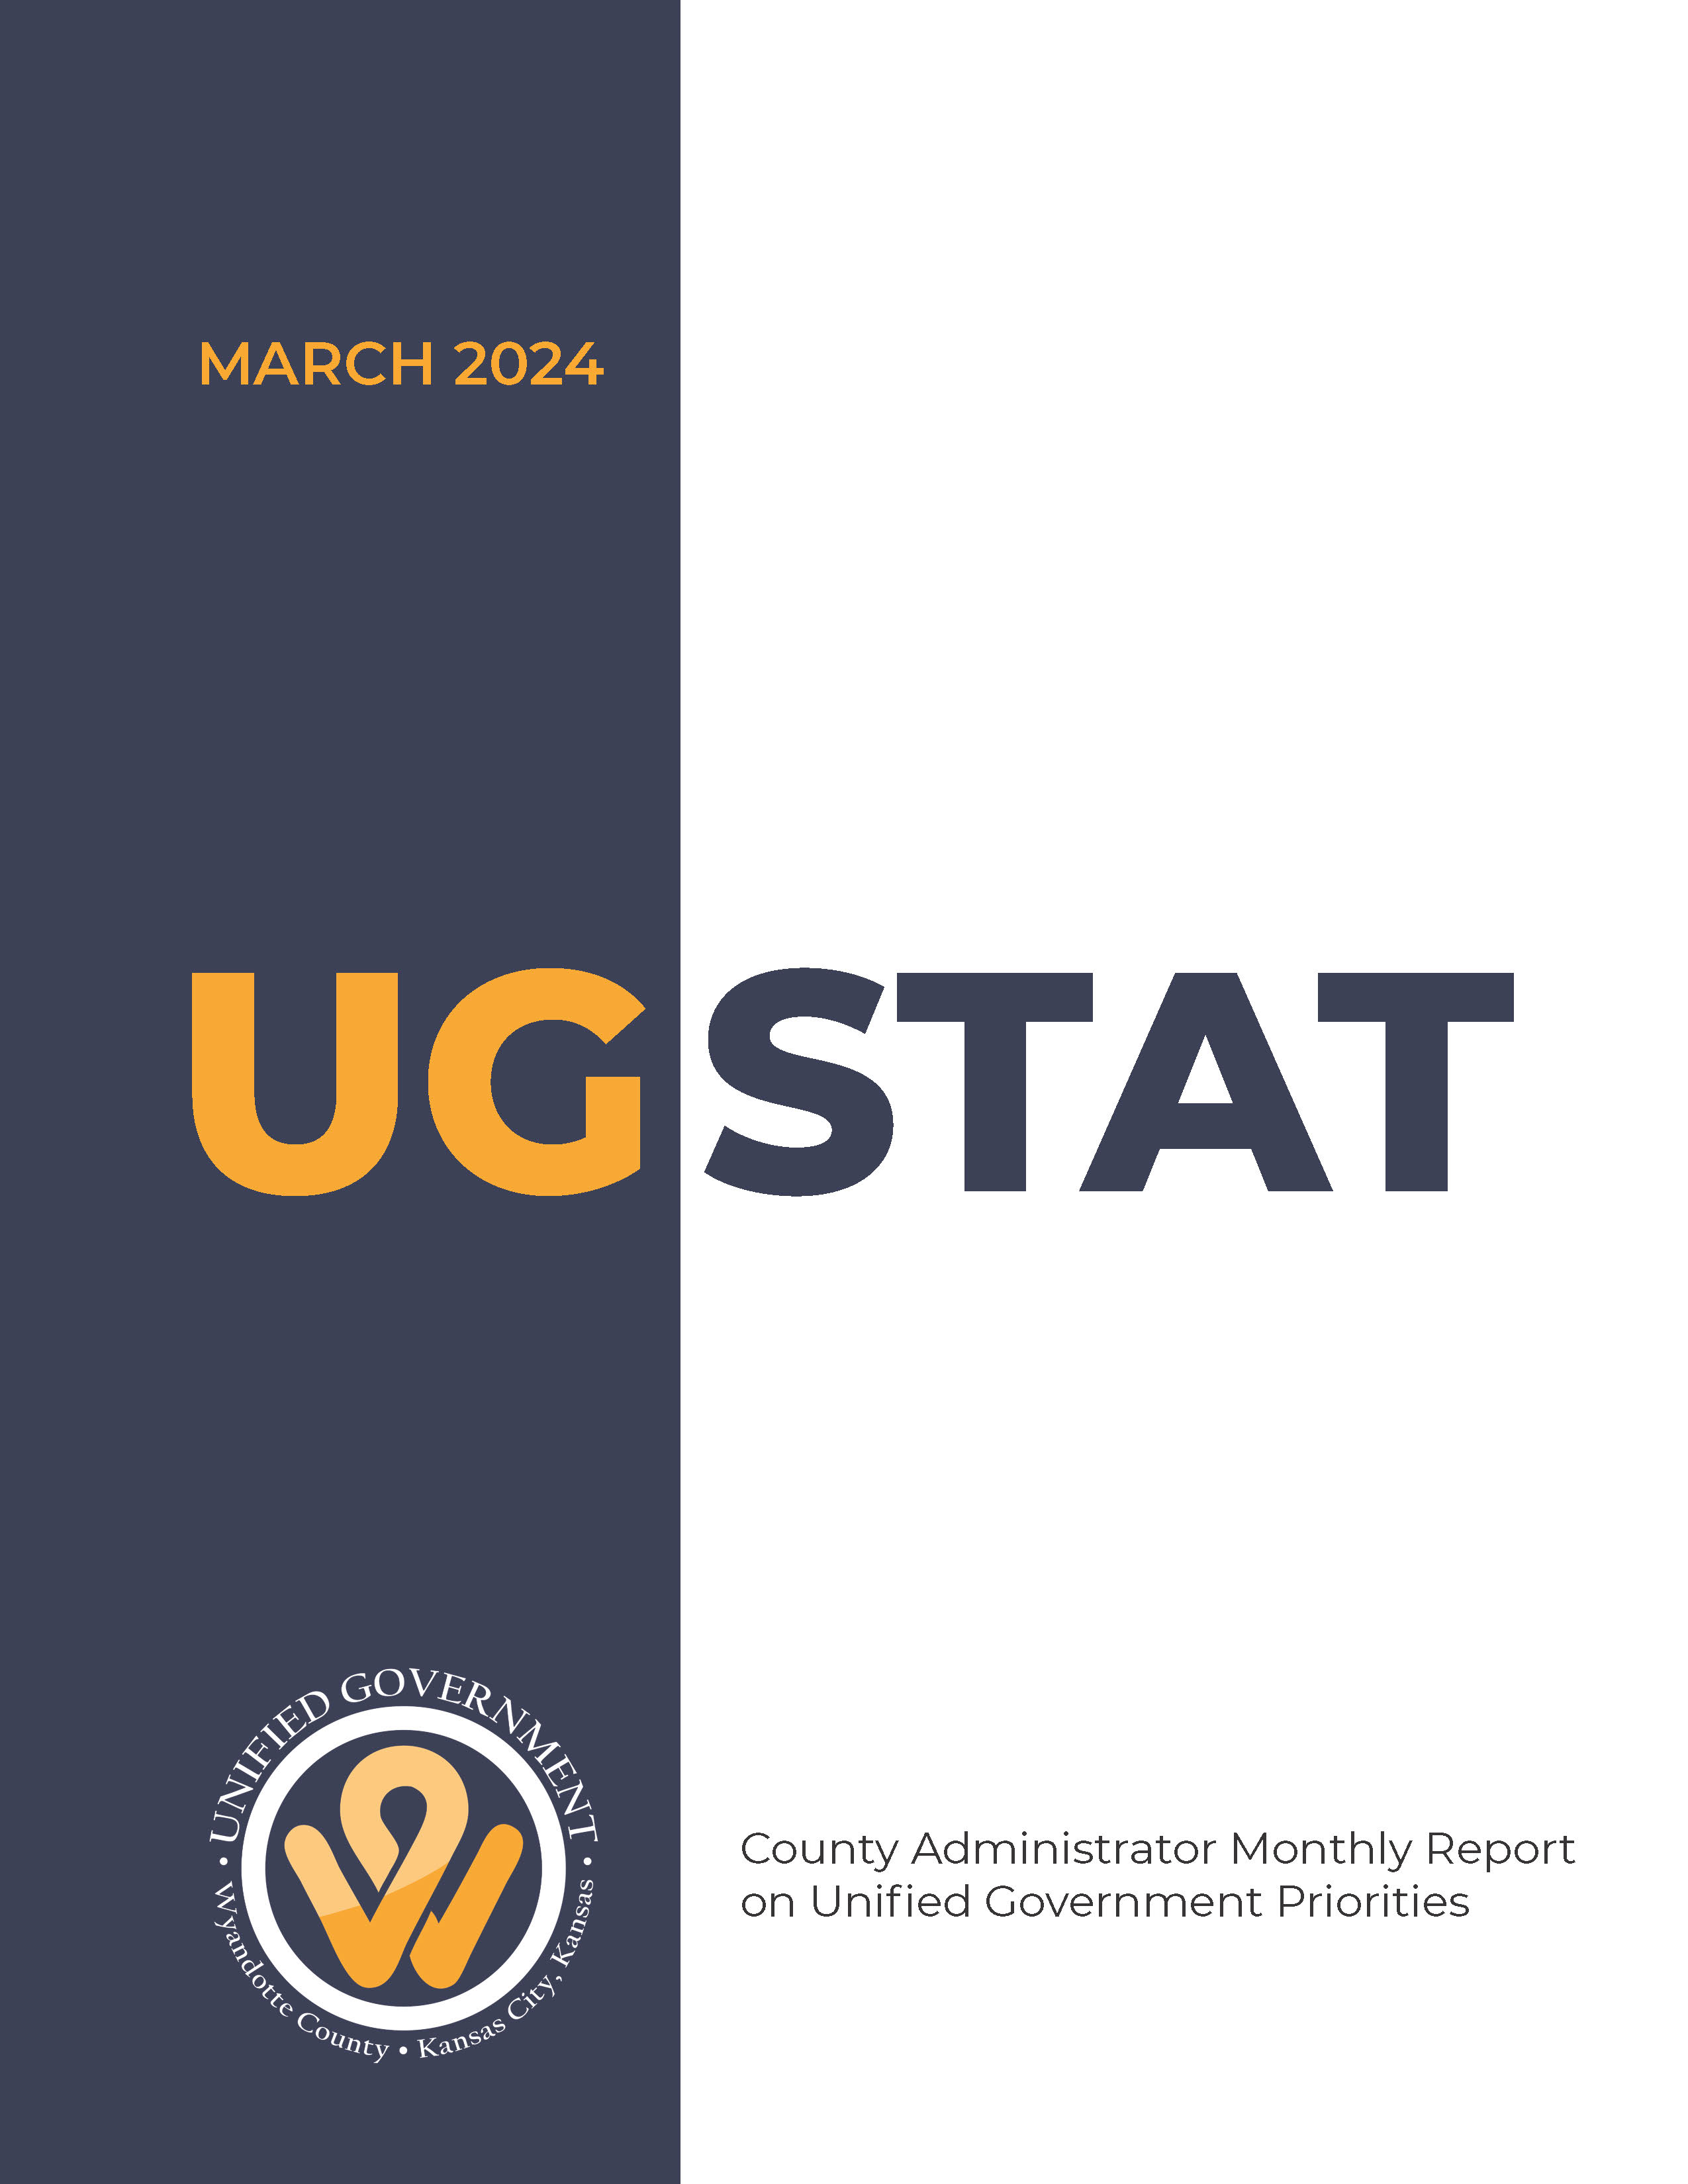 UGStat_March 2024 cover.jpg